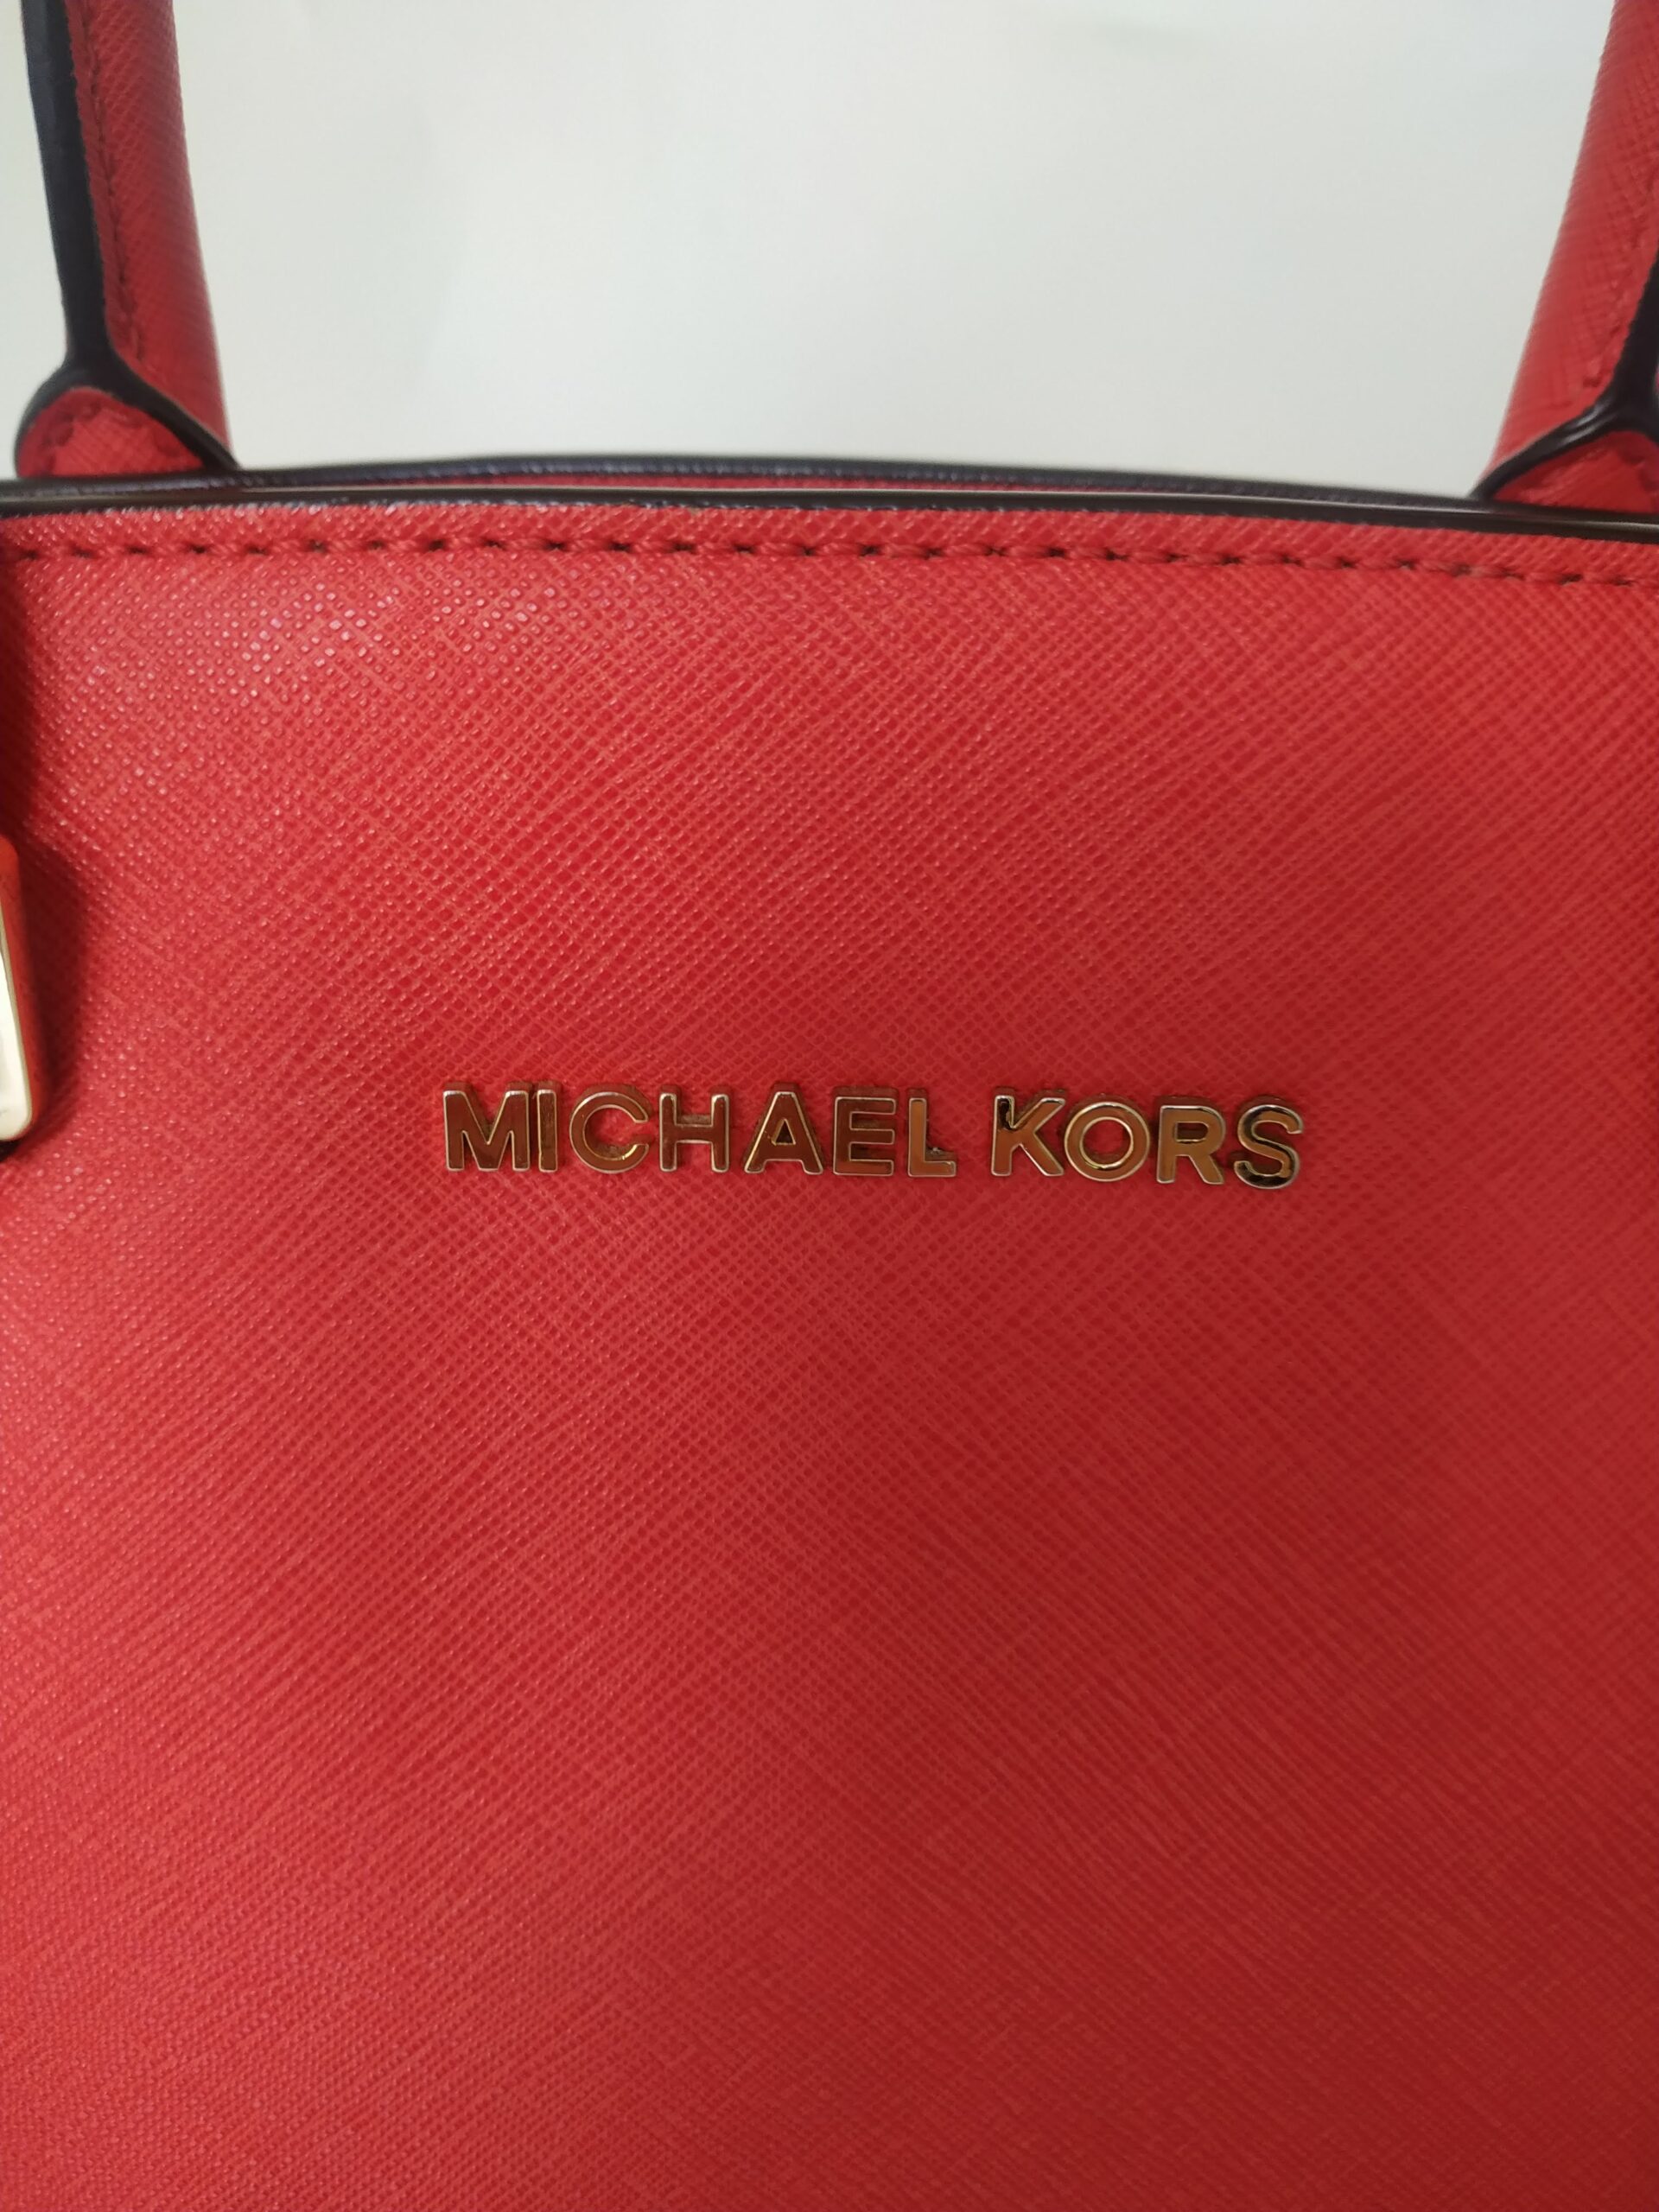 michael kors selma large satchel top-zip red gold leather